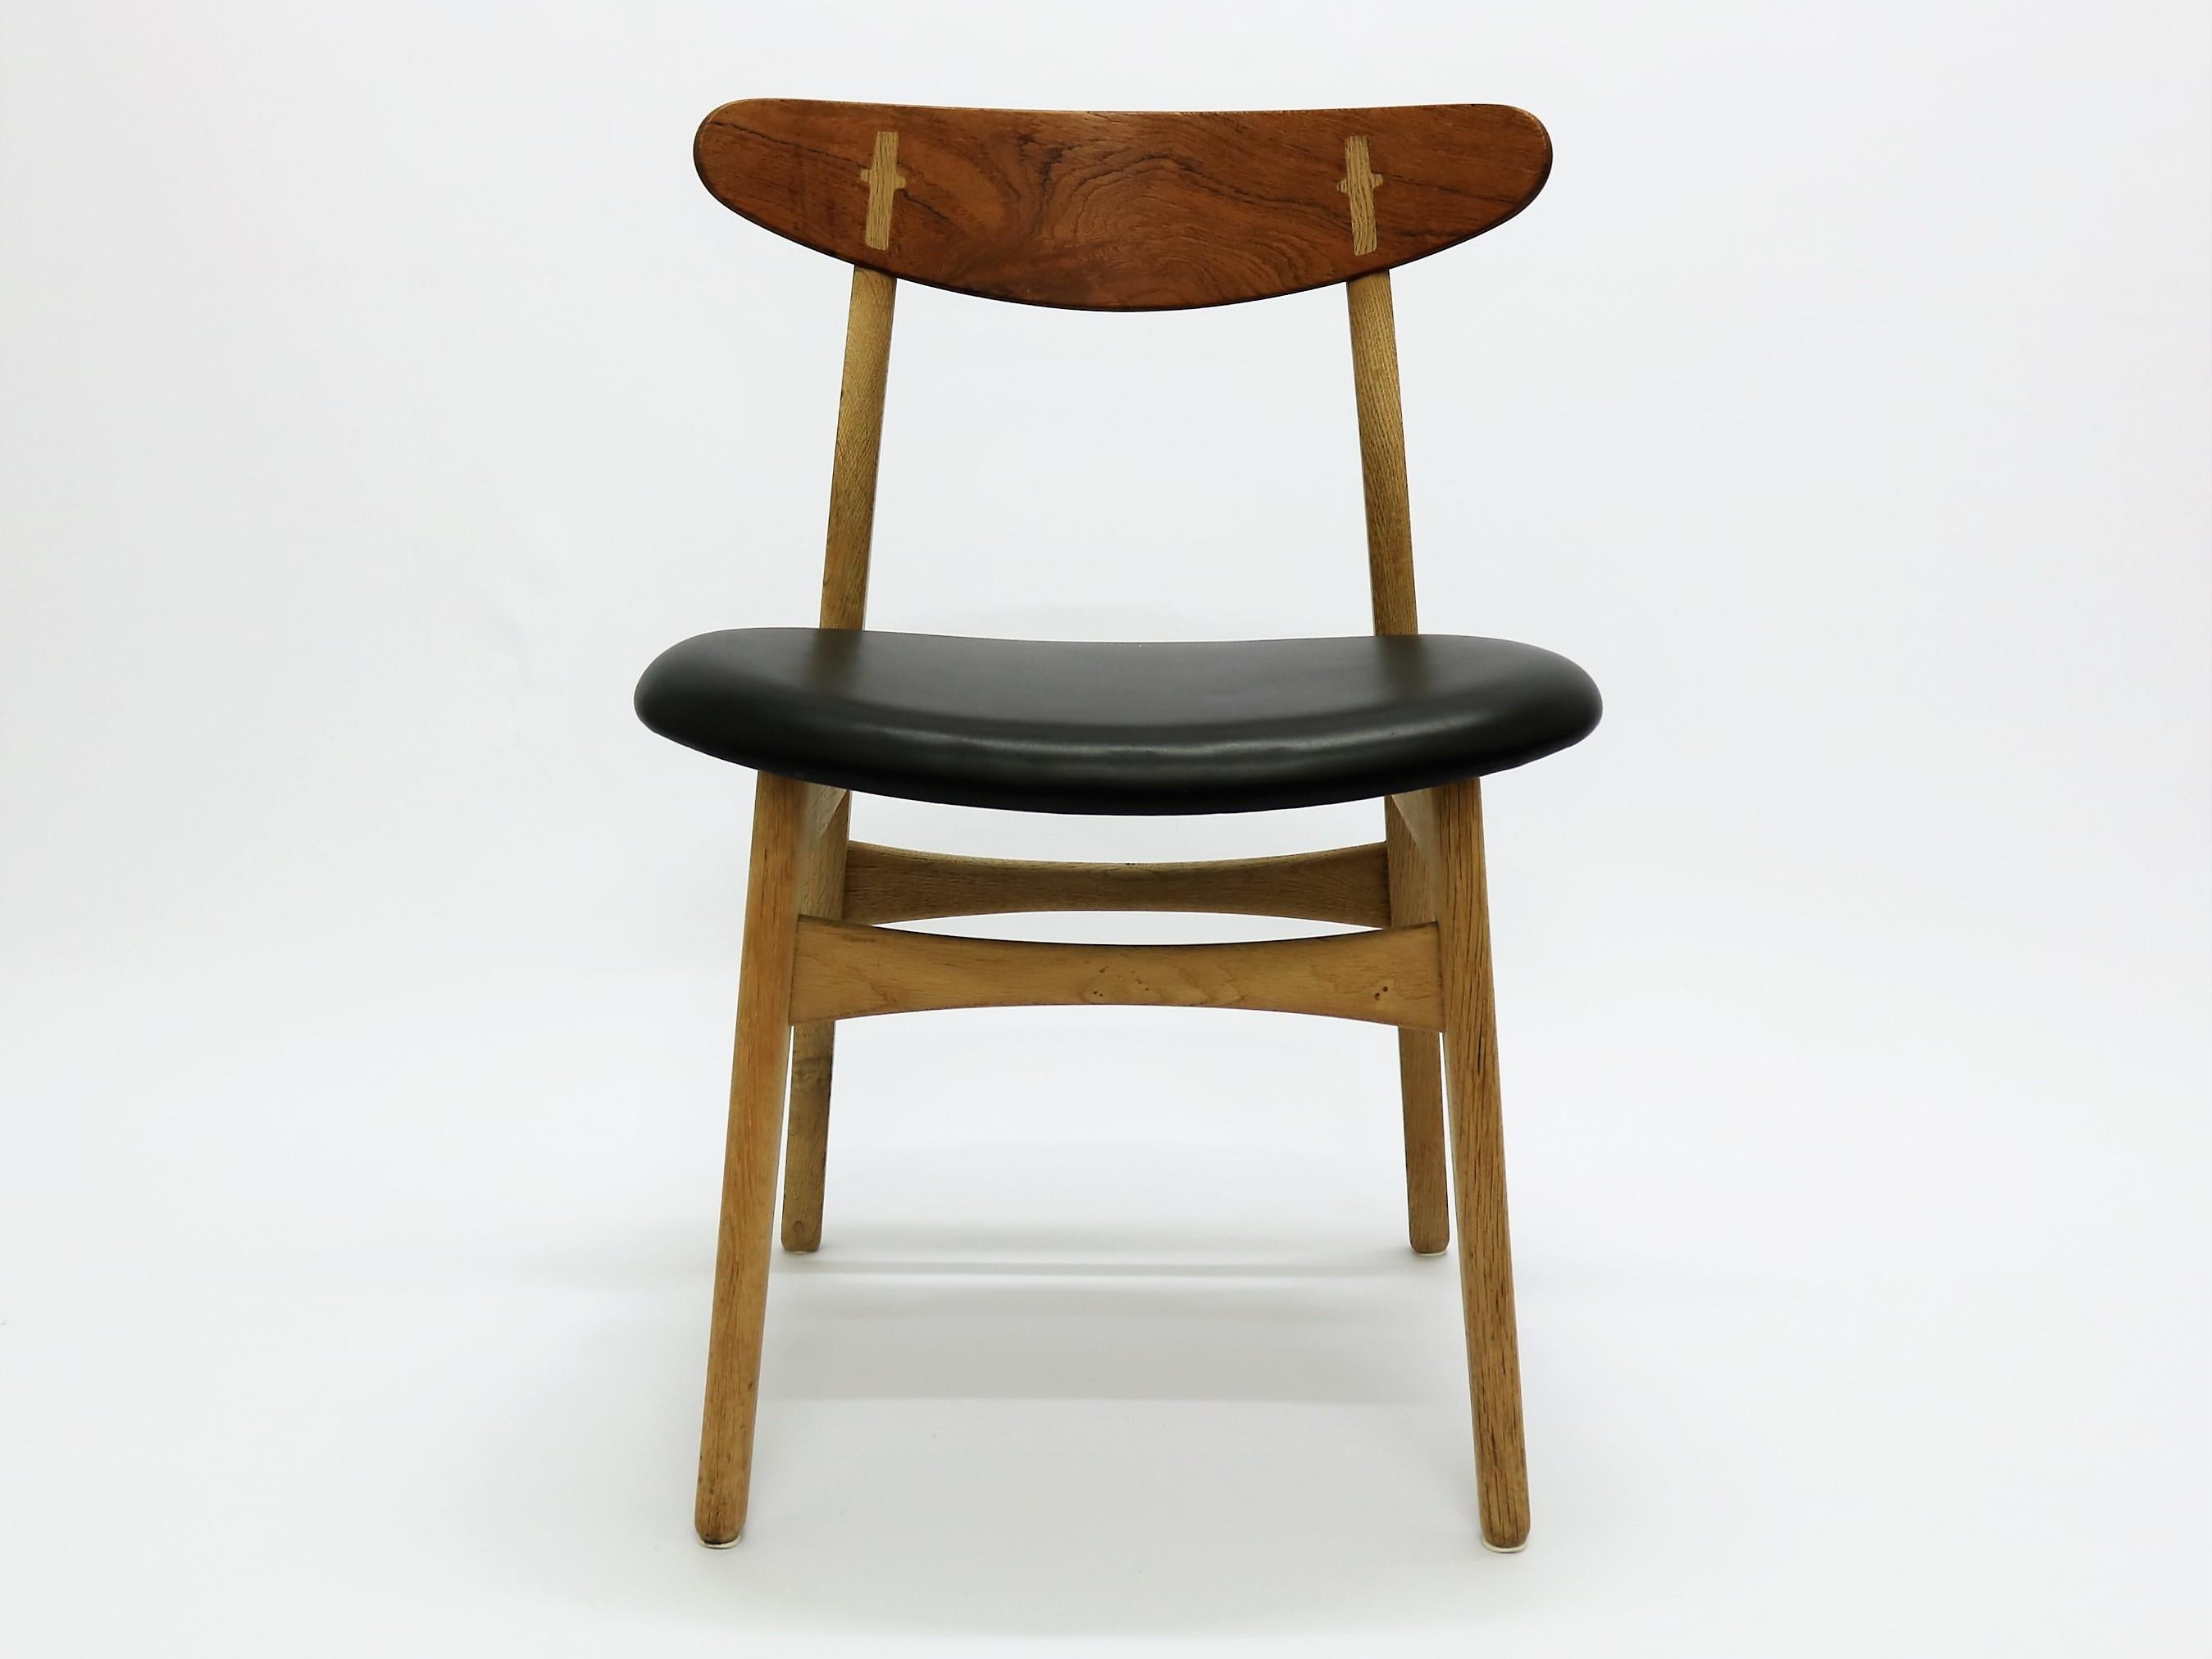 Set of 8 vintage dining chairs in teak, oak and leather by Hans J. Wegner for Carl Hansen & Son, Denmark.